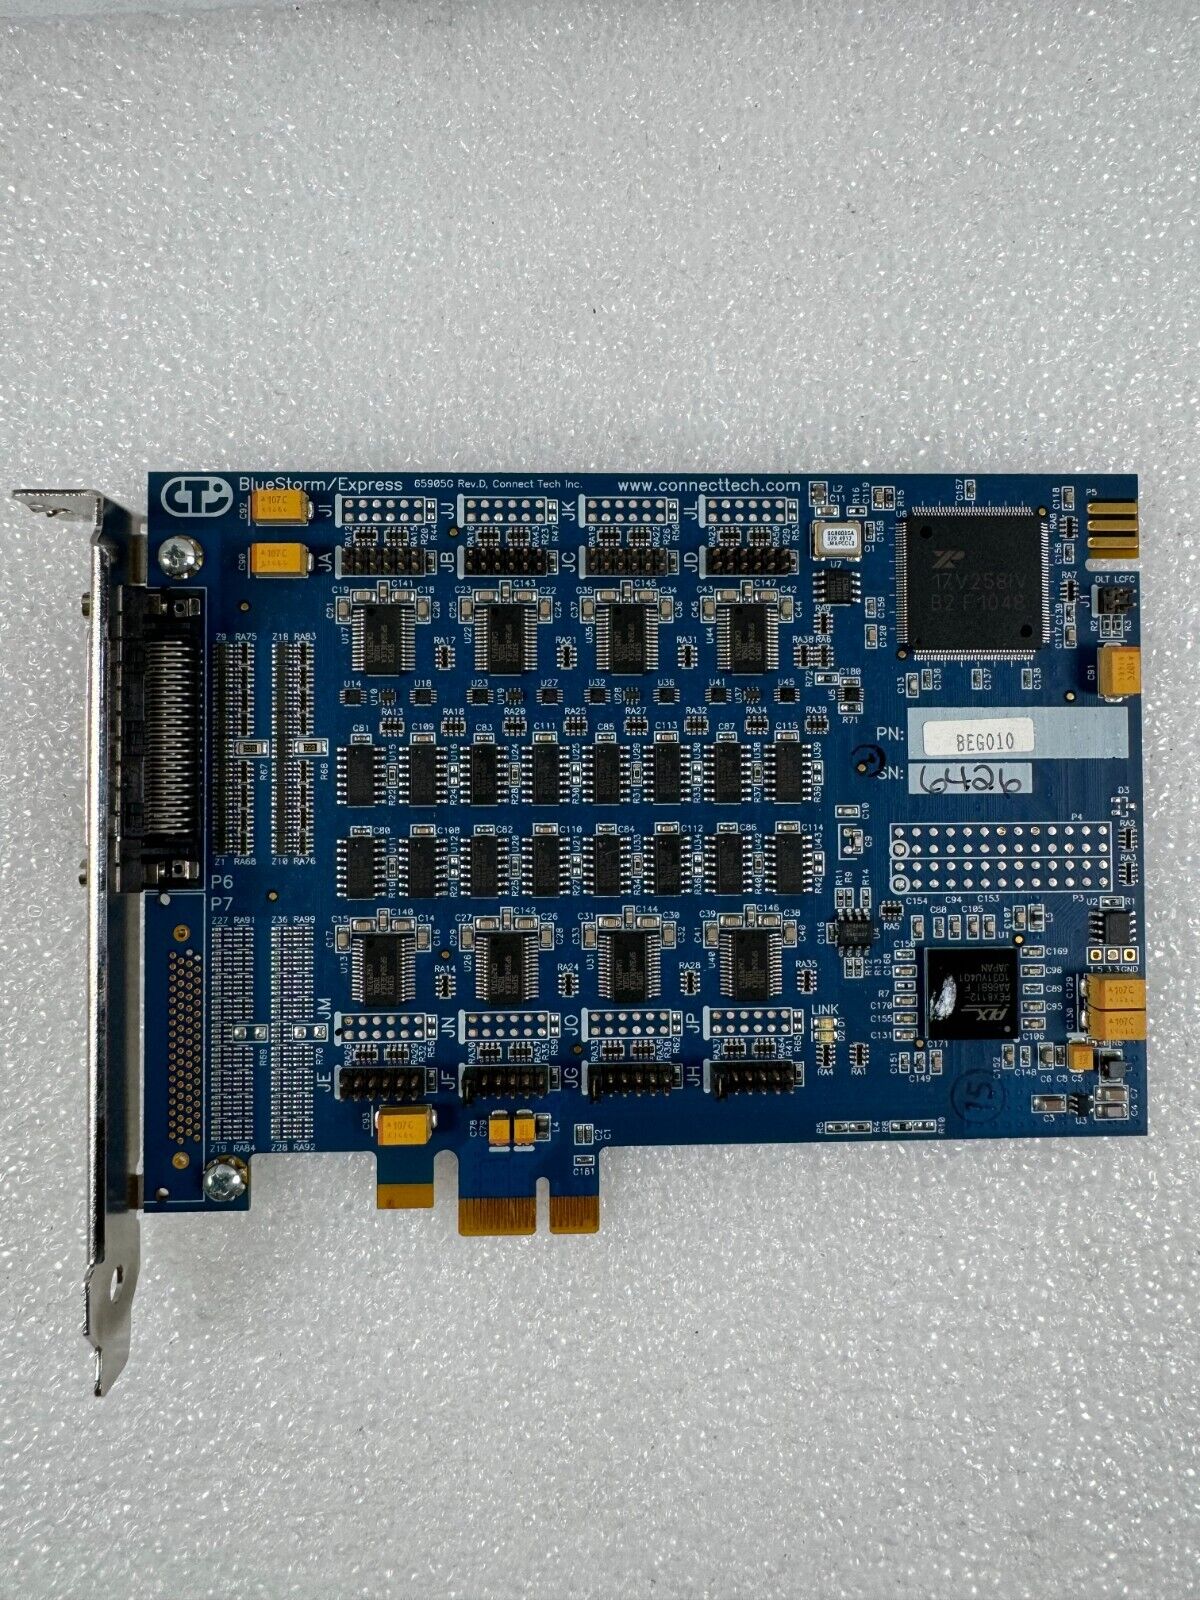 Connect Tech BlueStorm Express 65905G Rev D BEG005 PCI-e Serial Card Ports 1-8